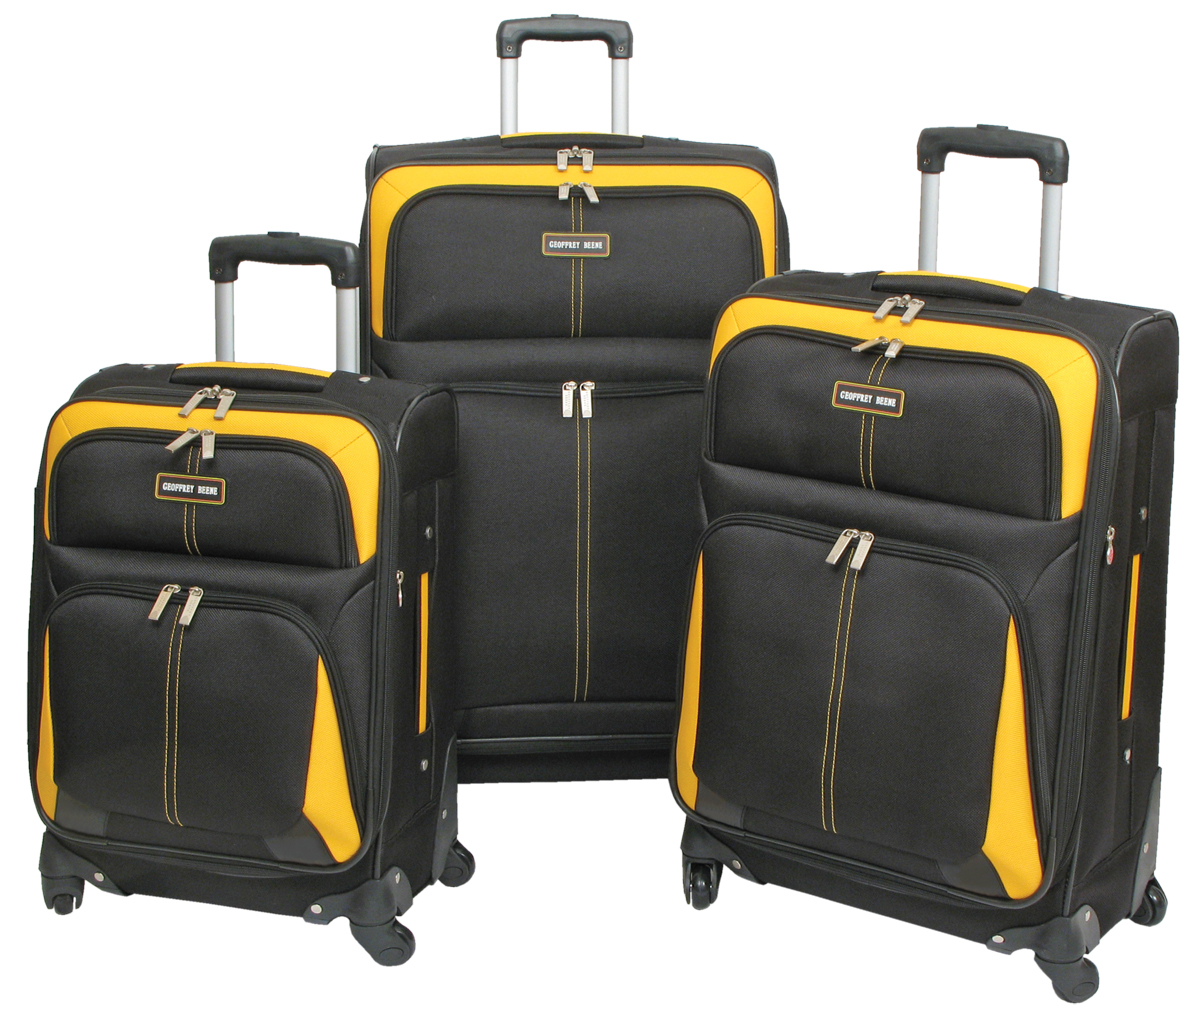 Gb655-3 Golden State Fashion Luggage Set - Black & Yellow, 3 Piece